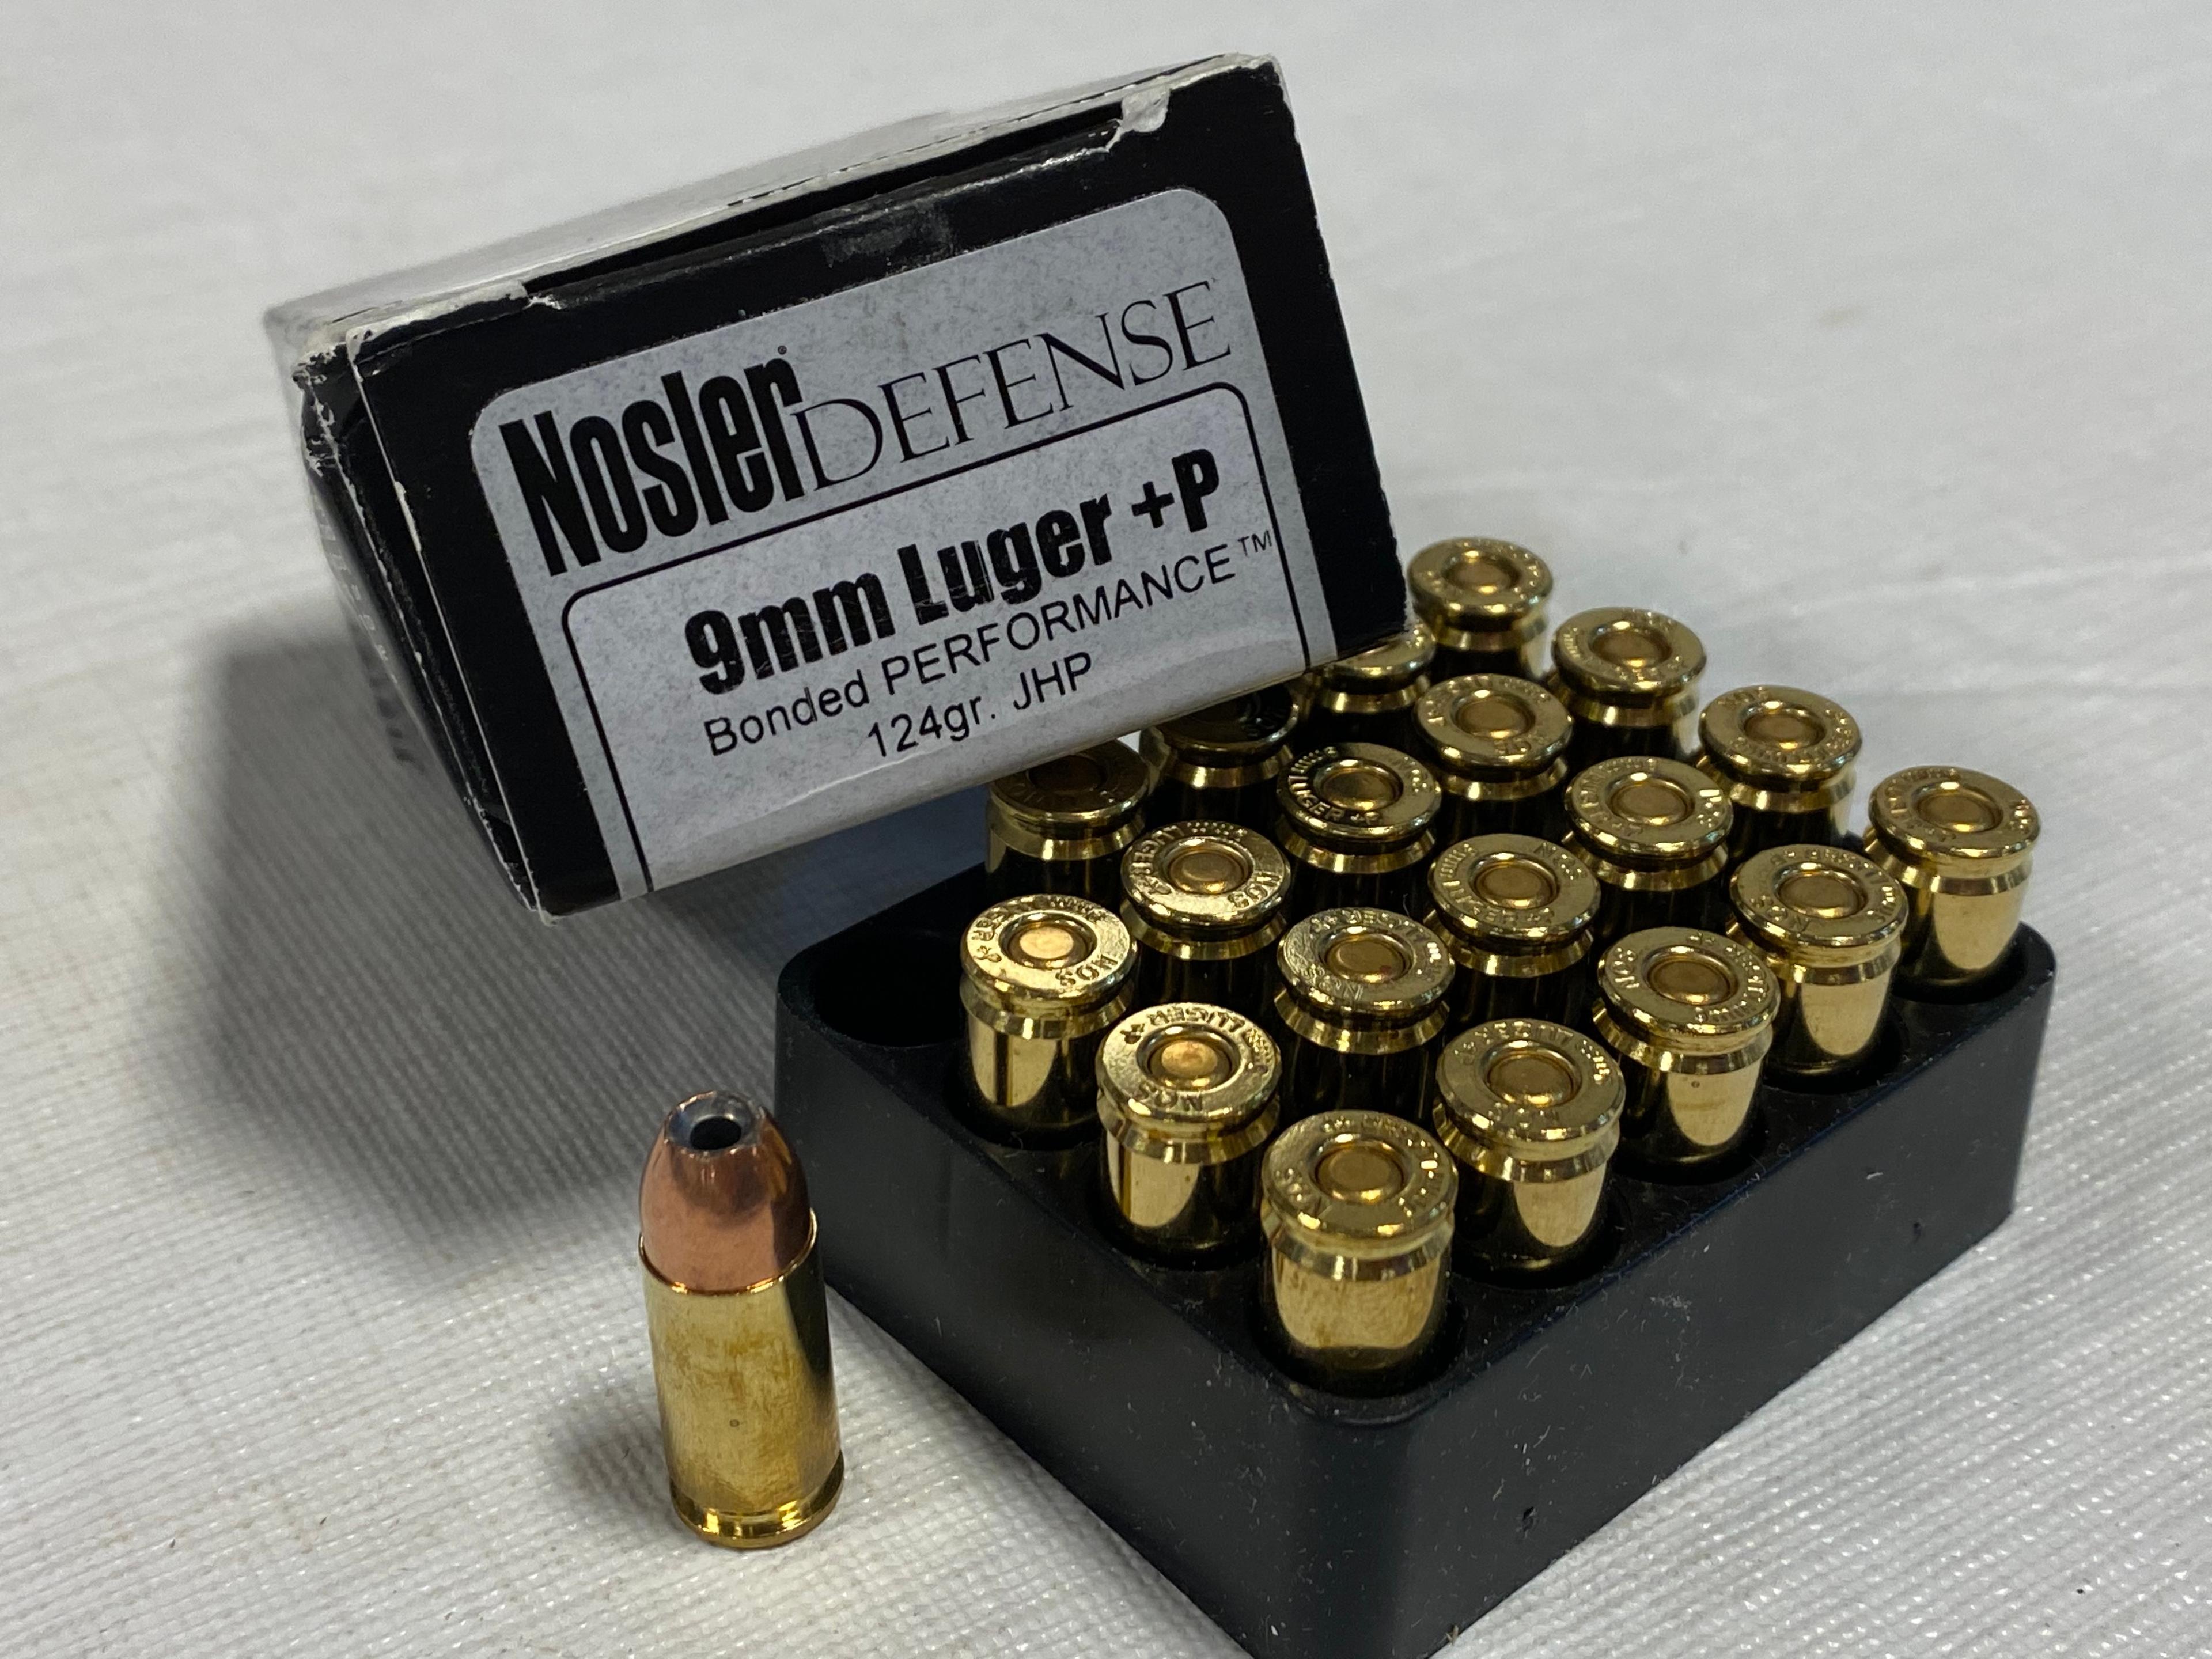 NIB 20rds. 9mm +P 124gr. JHP Bonded Performance Nosler Defense Ammunition